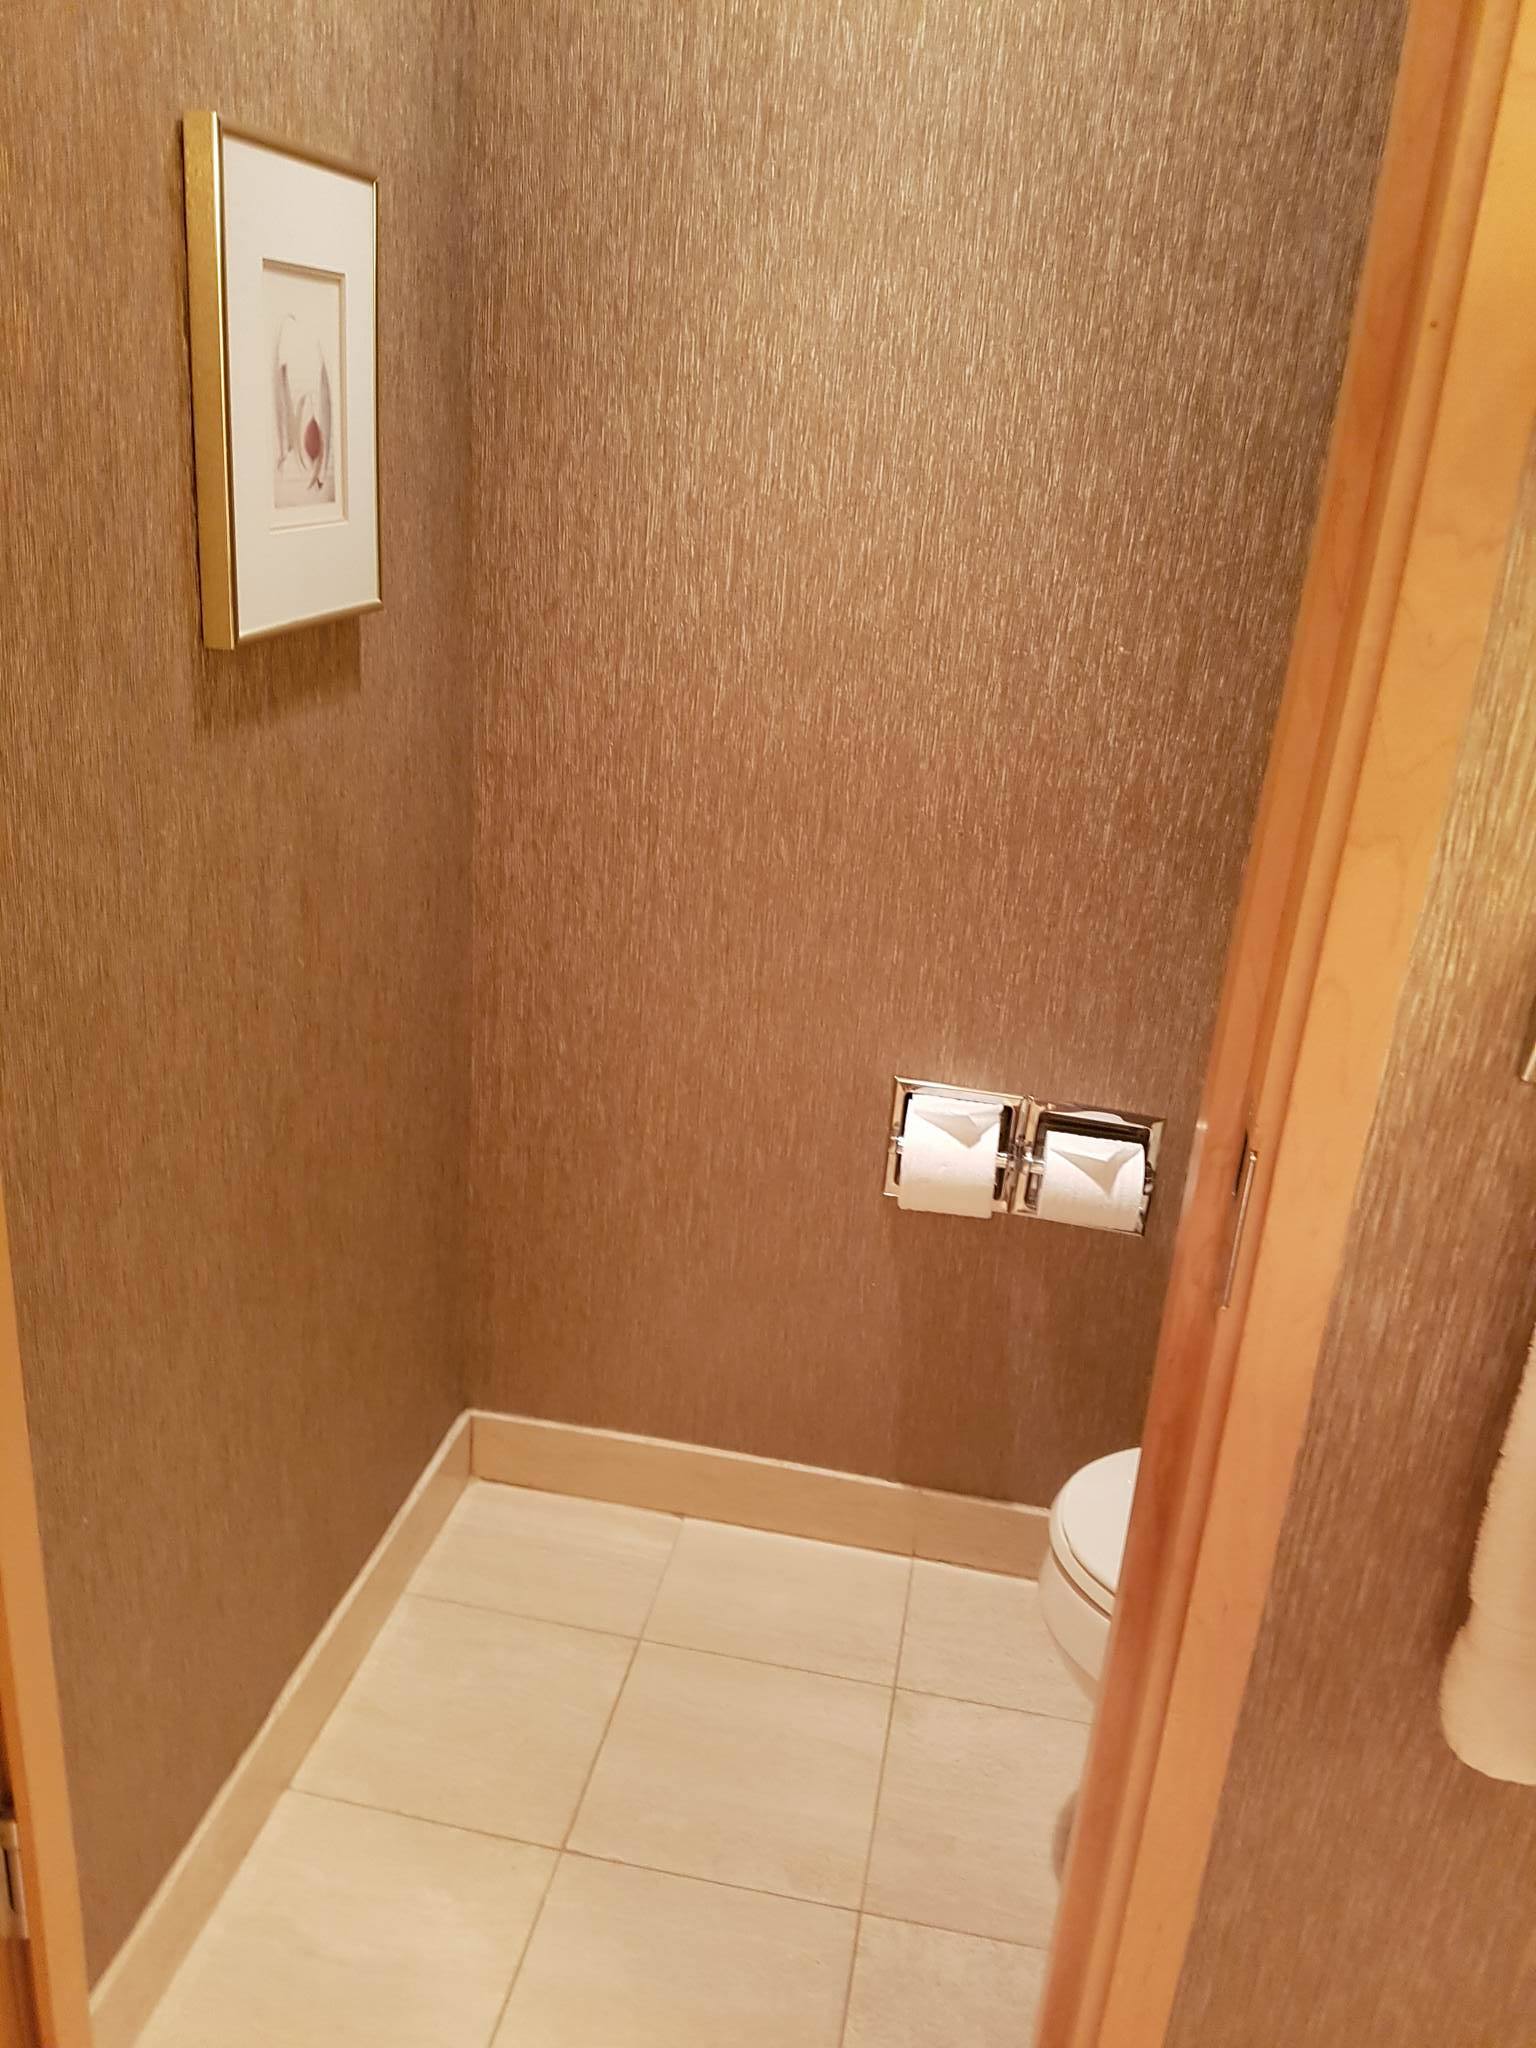 Bathroom at Pan Pacific Vancouver